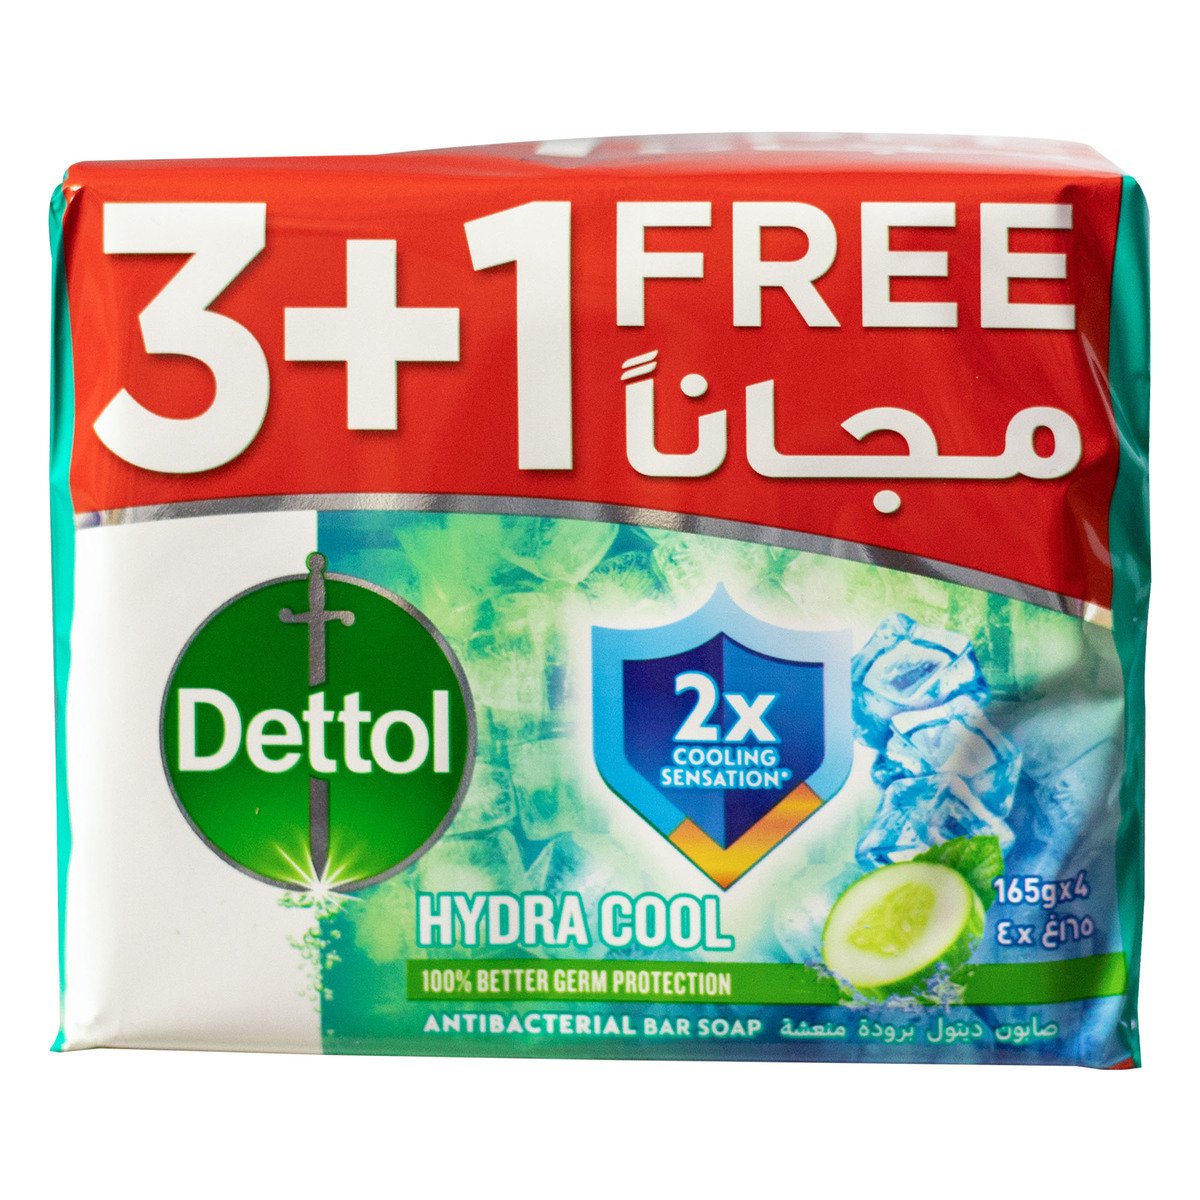 Dettol Hydra Cool Antibacterial Bar Soap 165 g 3+1